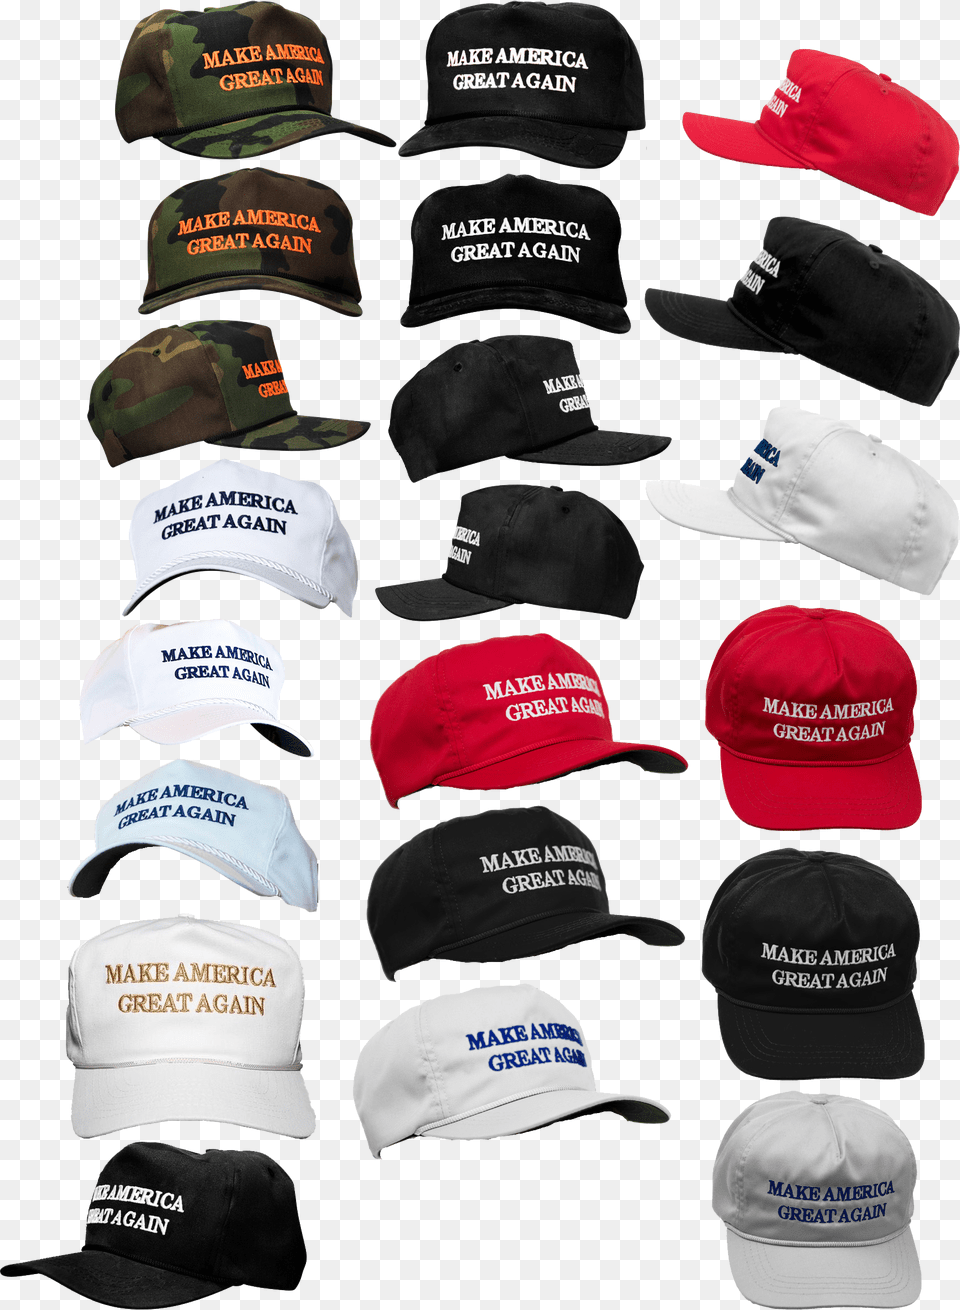 Make Americ Great Aga Makeamerica Greatagain Make America Maga Hat For Photoshop, Baseball Cap, Cap, Clothing, Swimwear Png Image